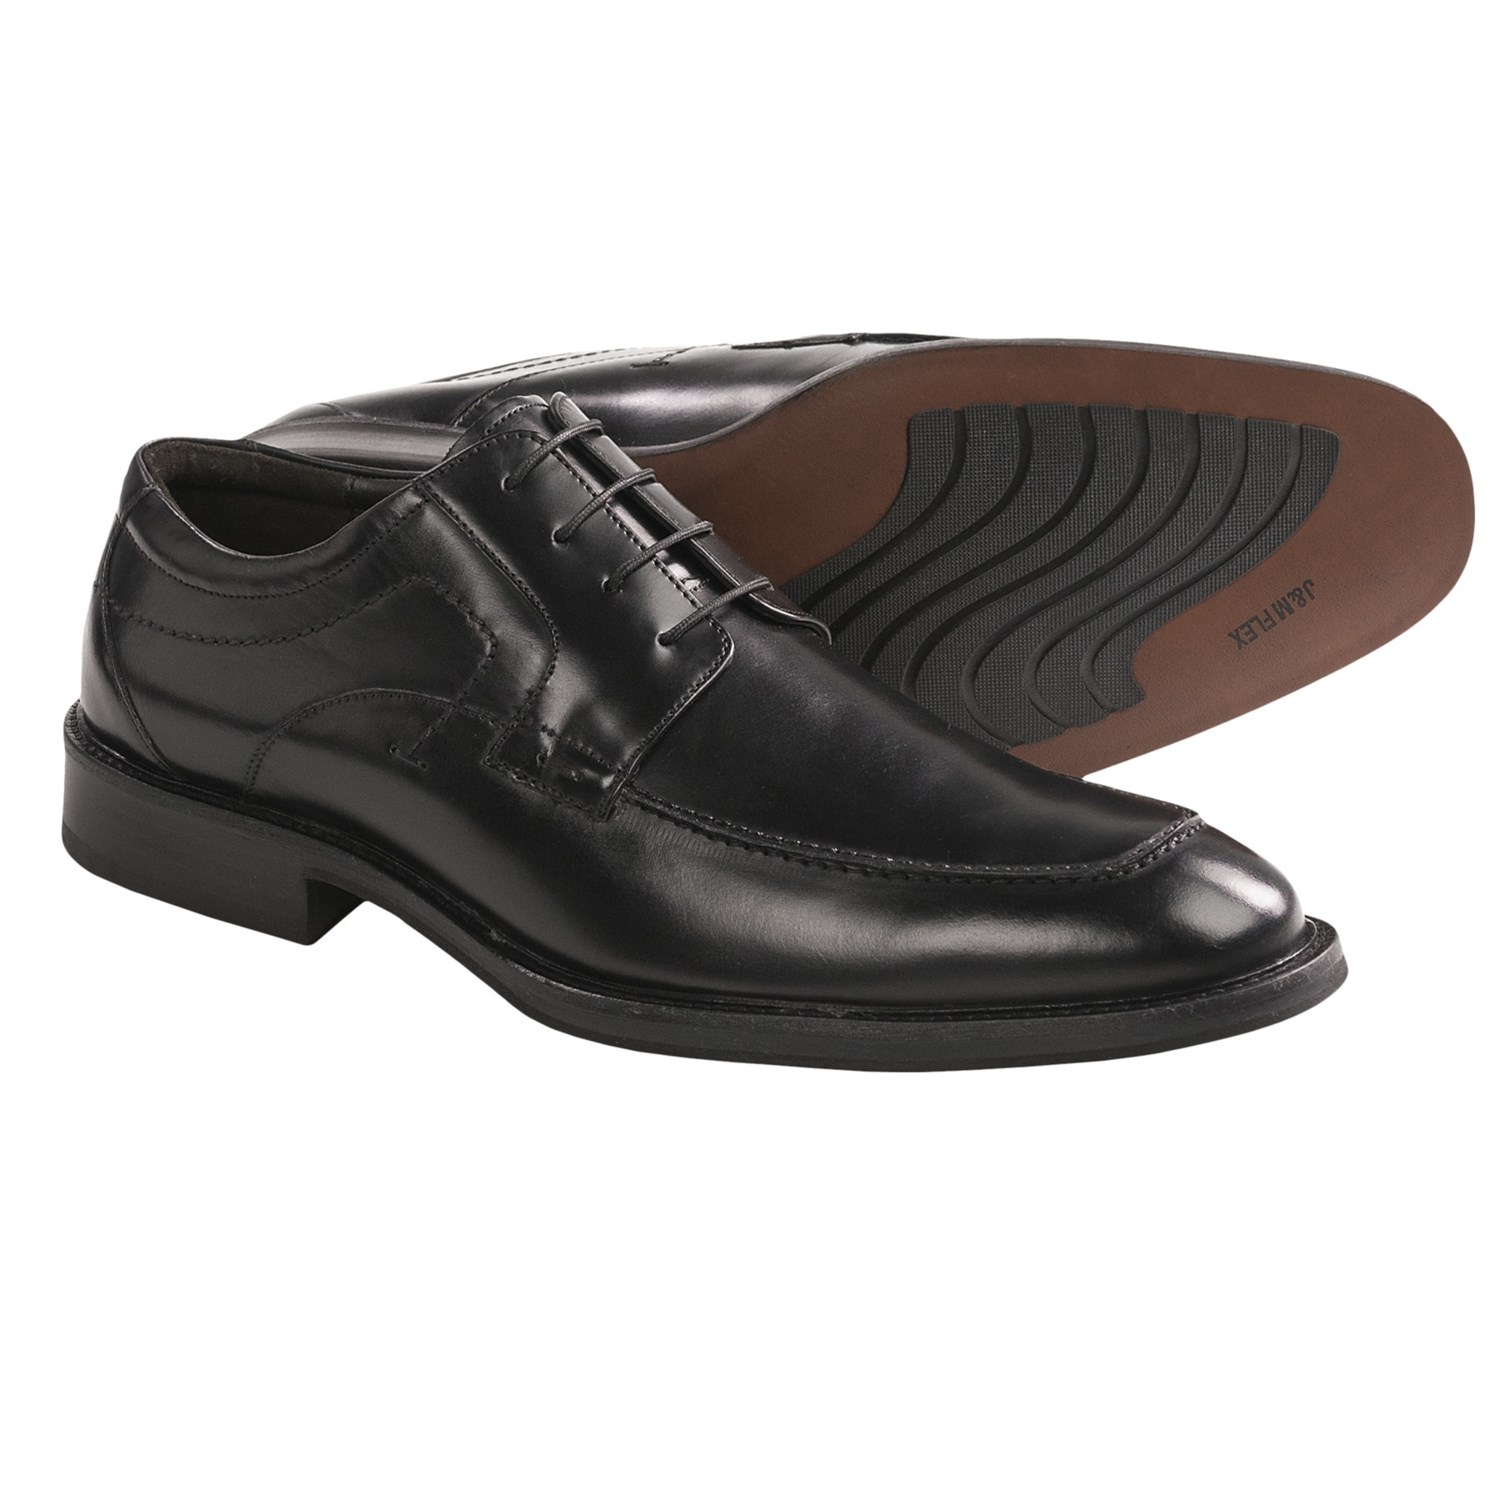 johnston-and-murphy-alderson-shoes-moc-toe-lace-ups-for-men-in-black~p ...